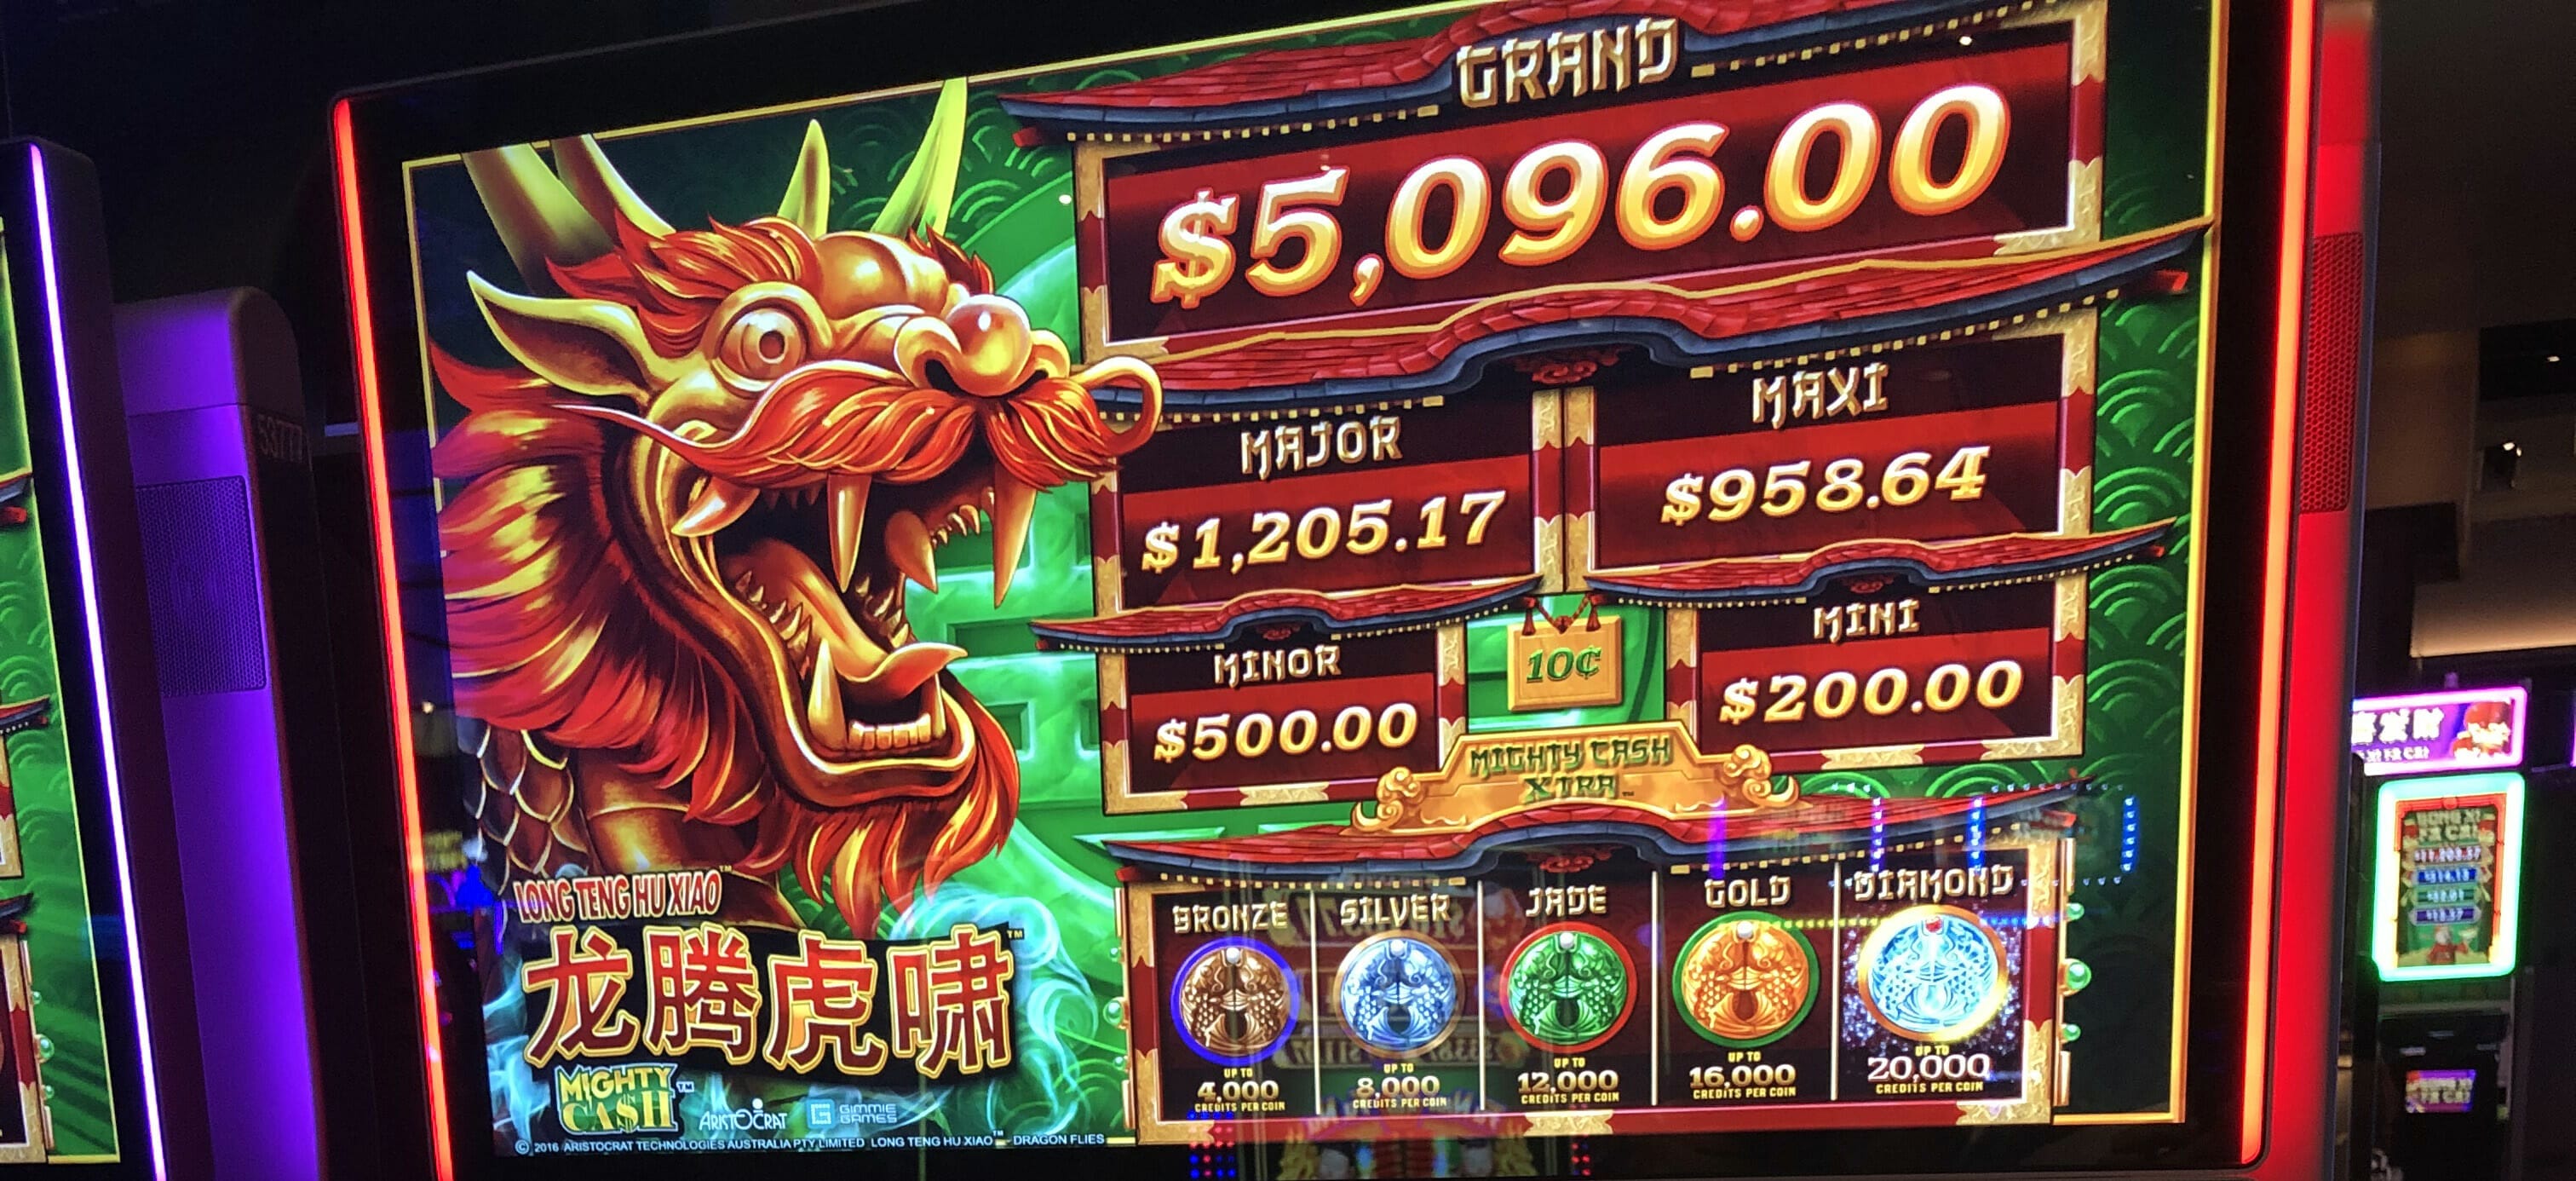 Mighty Cash Dragon Slot Machine